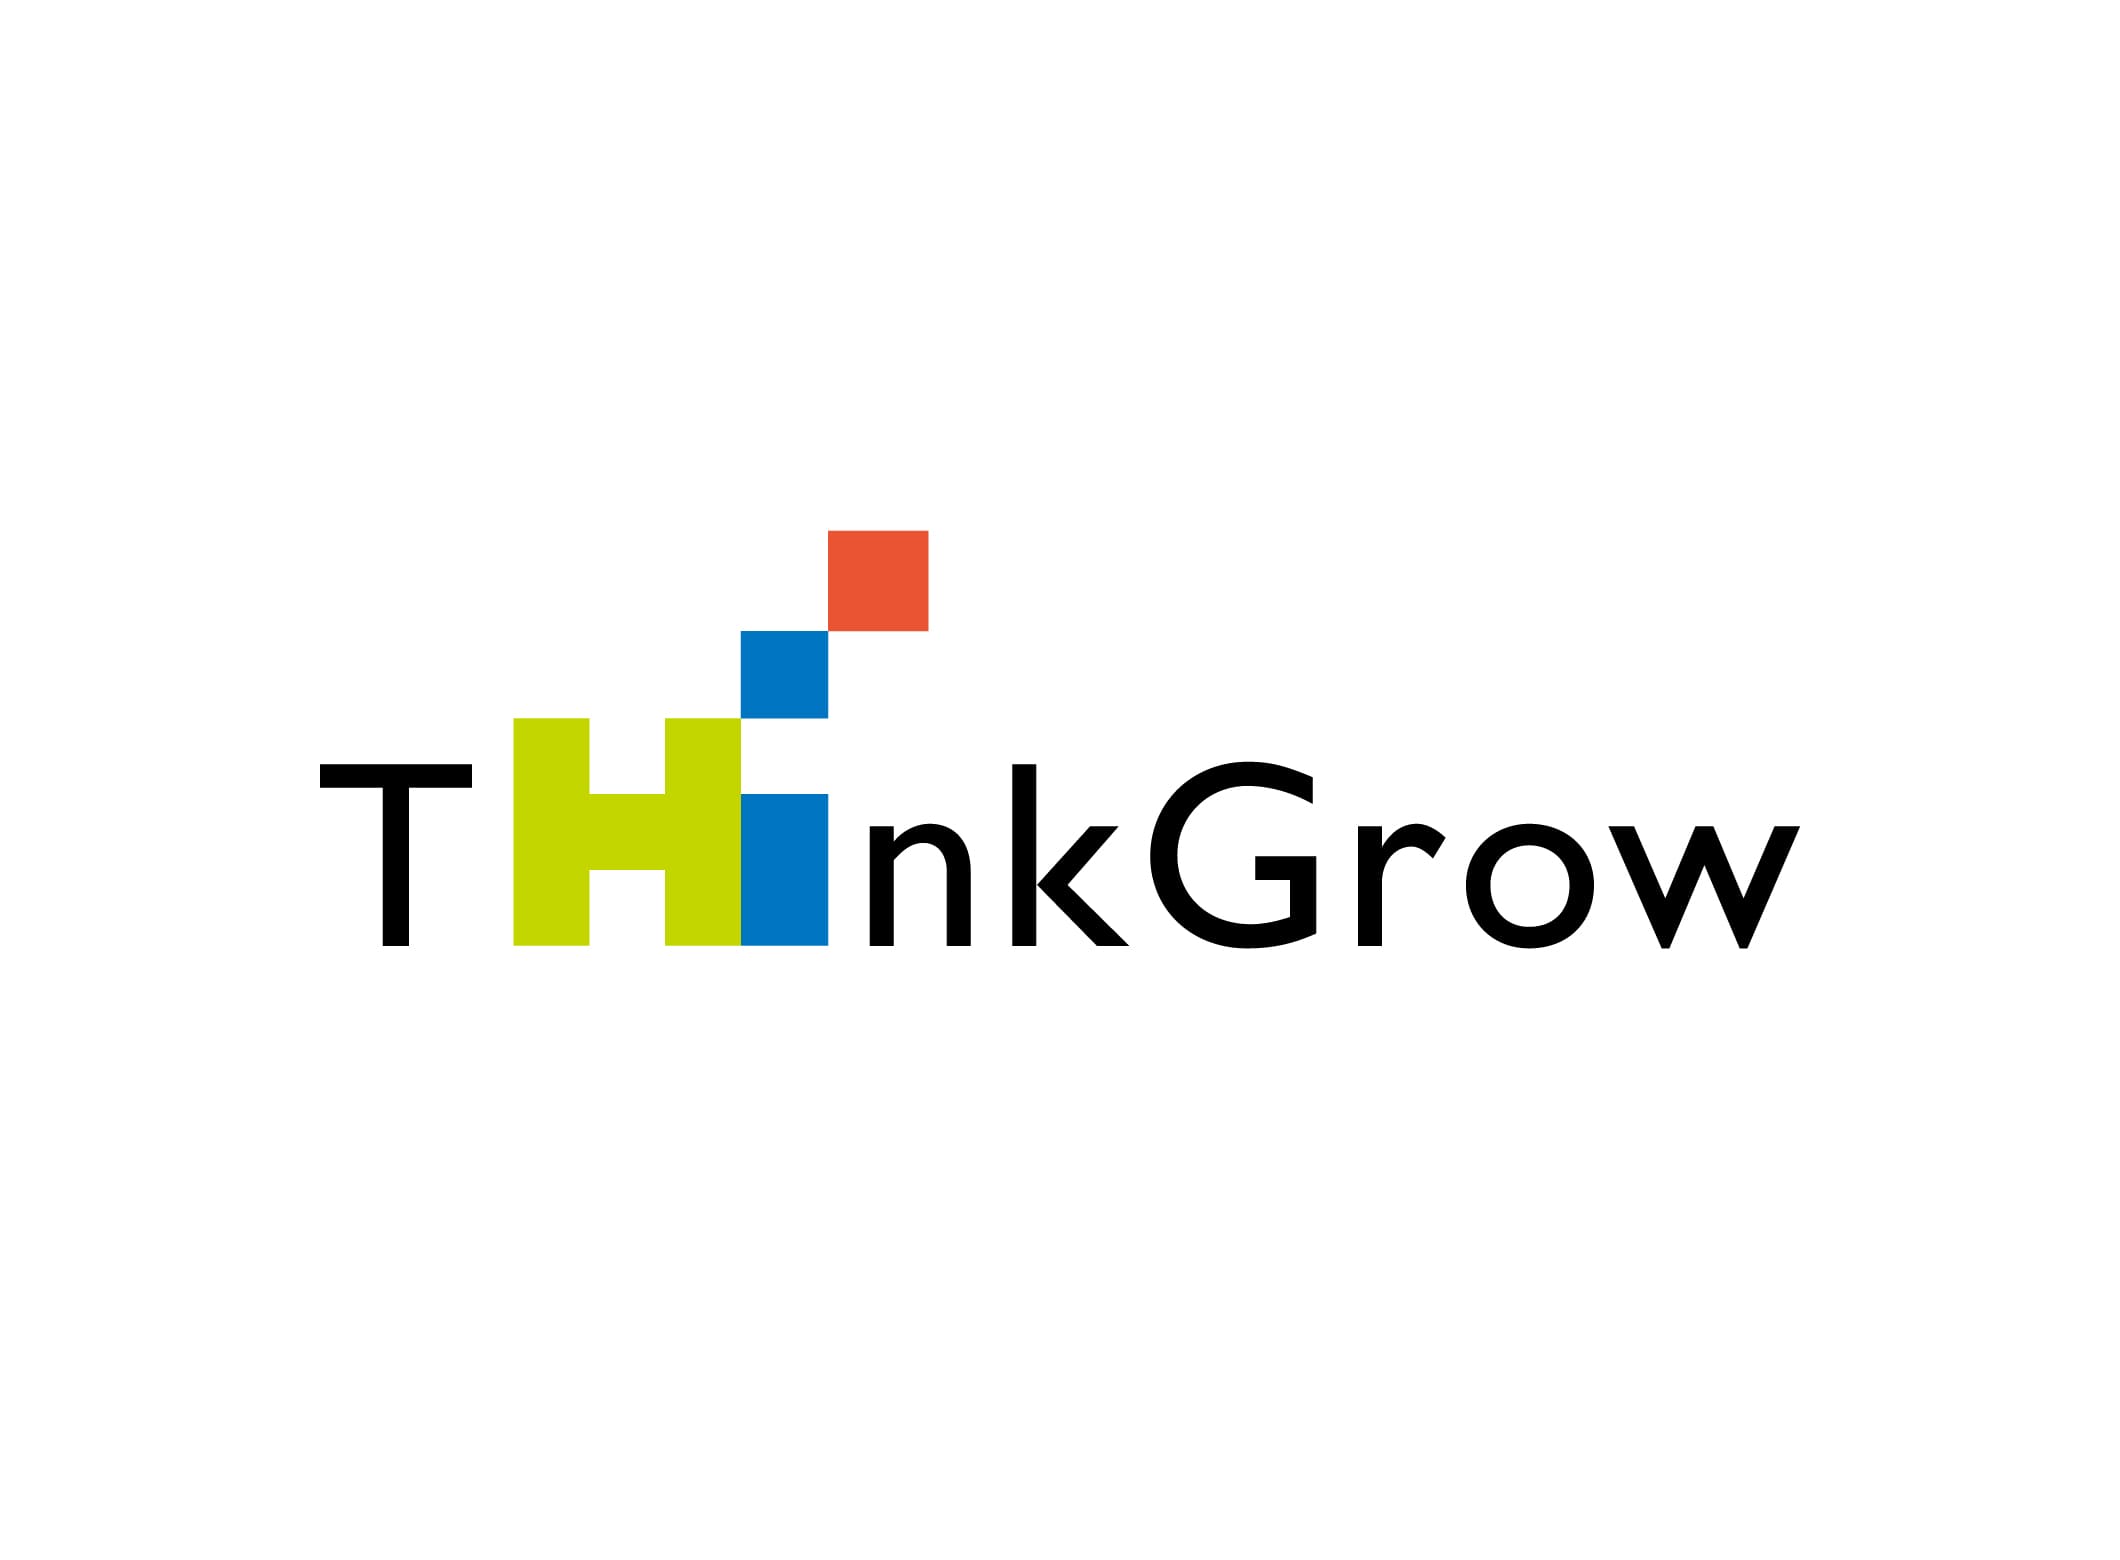 ThinkGrow